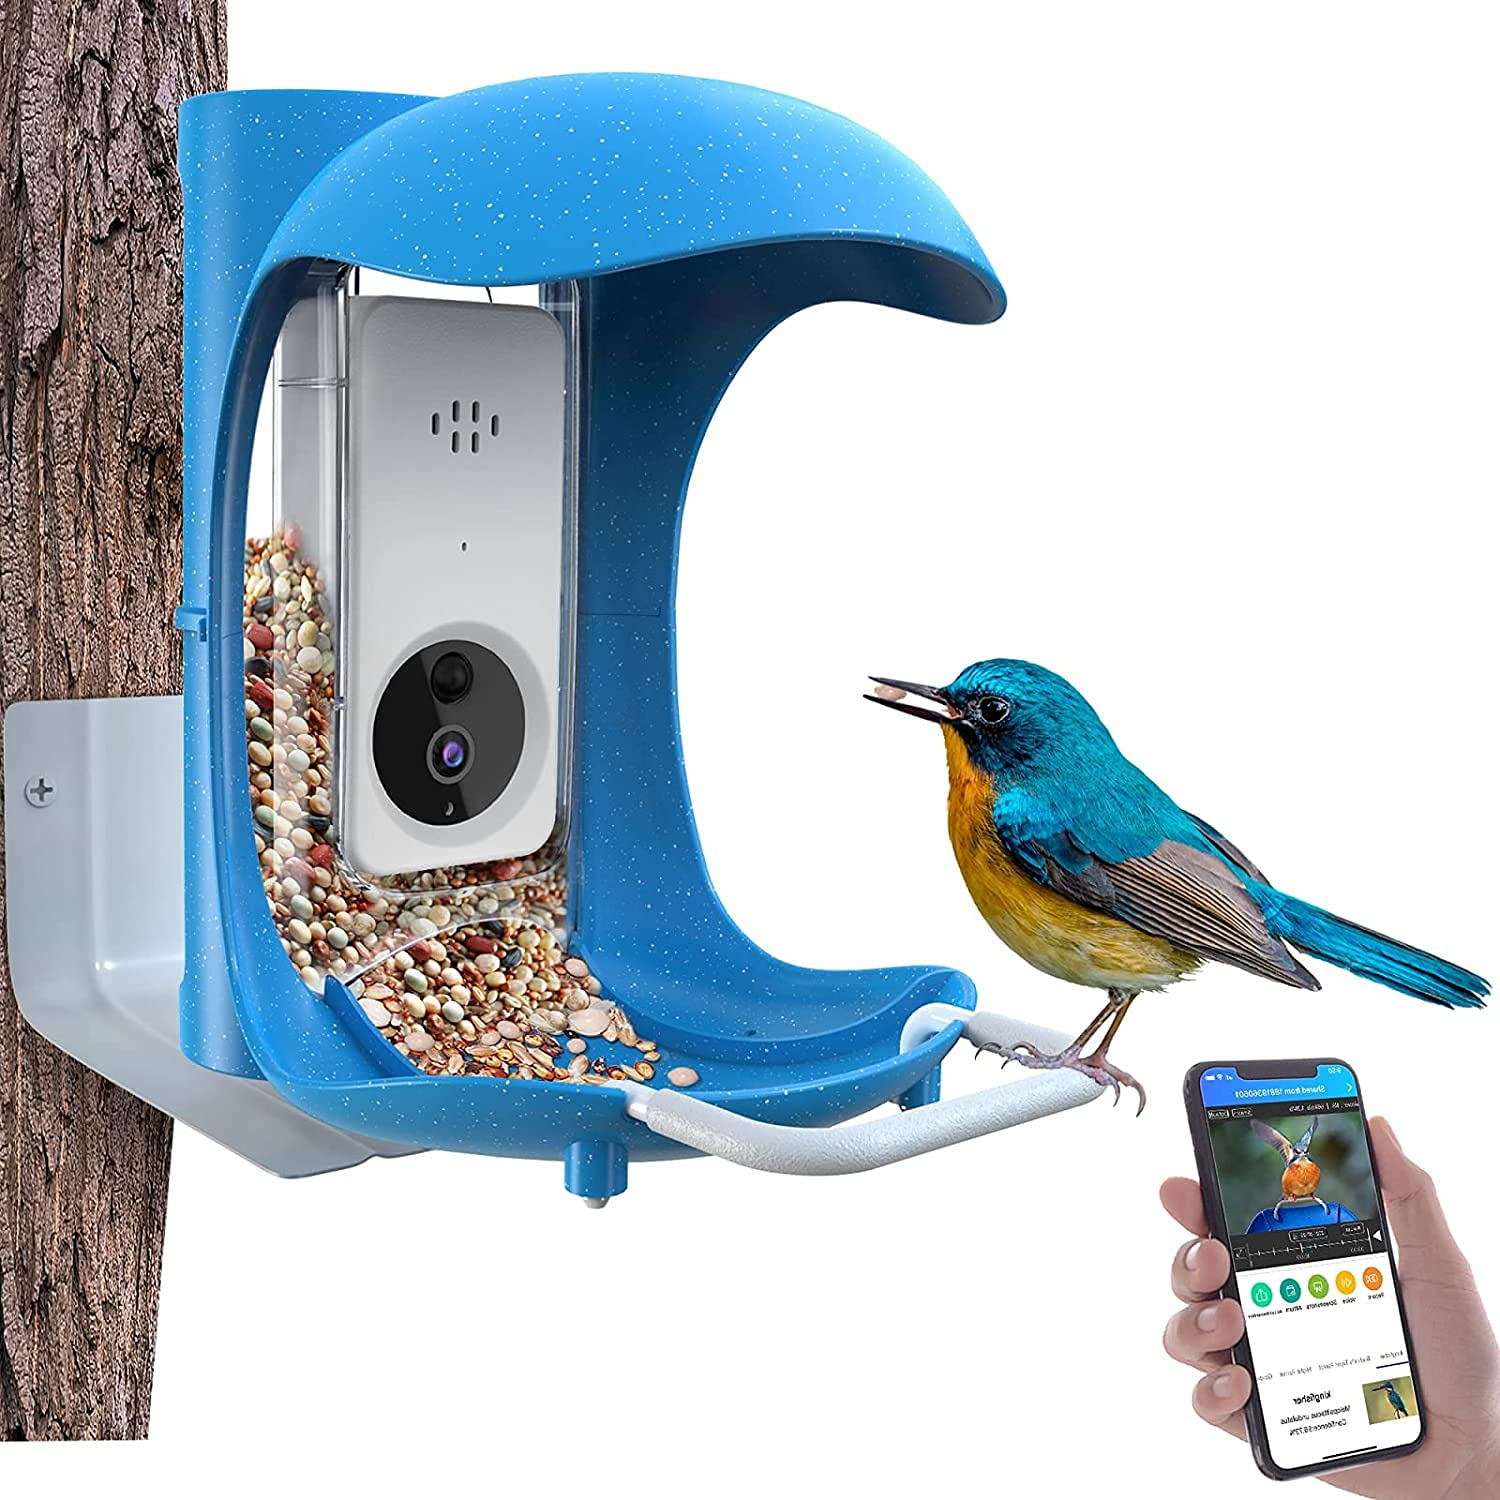 Birddock Smart Bird Feeder With Camera, Hd Visual Storage Feeders, Night Video Camera, Heavy Duty Base For Waterproof Outsideyar